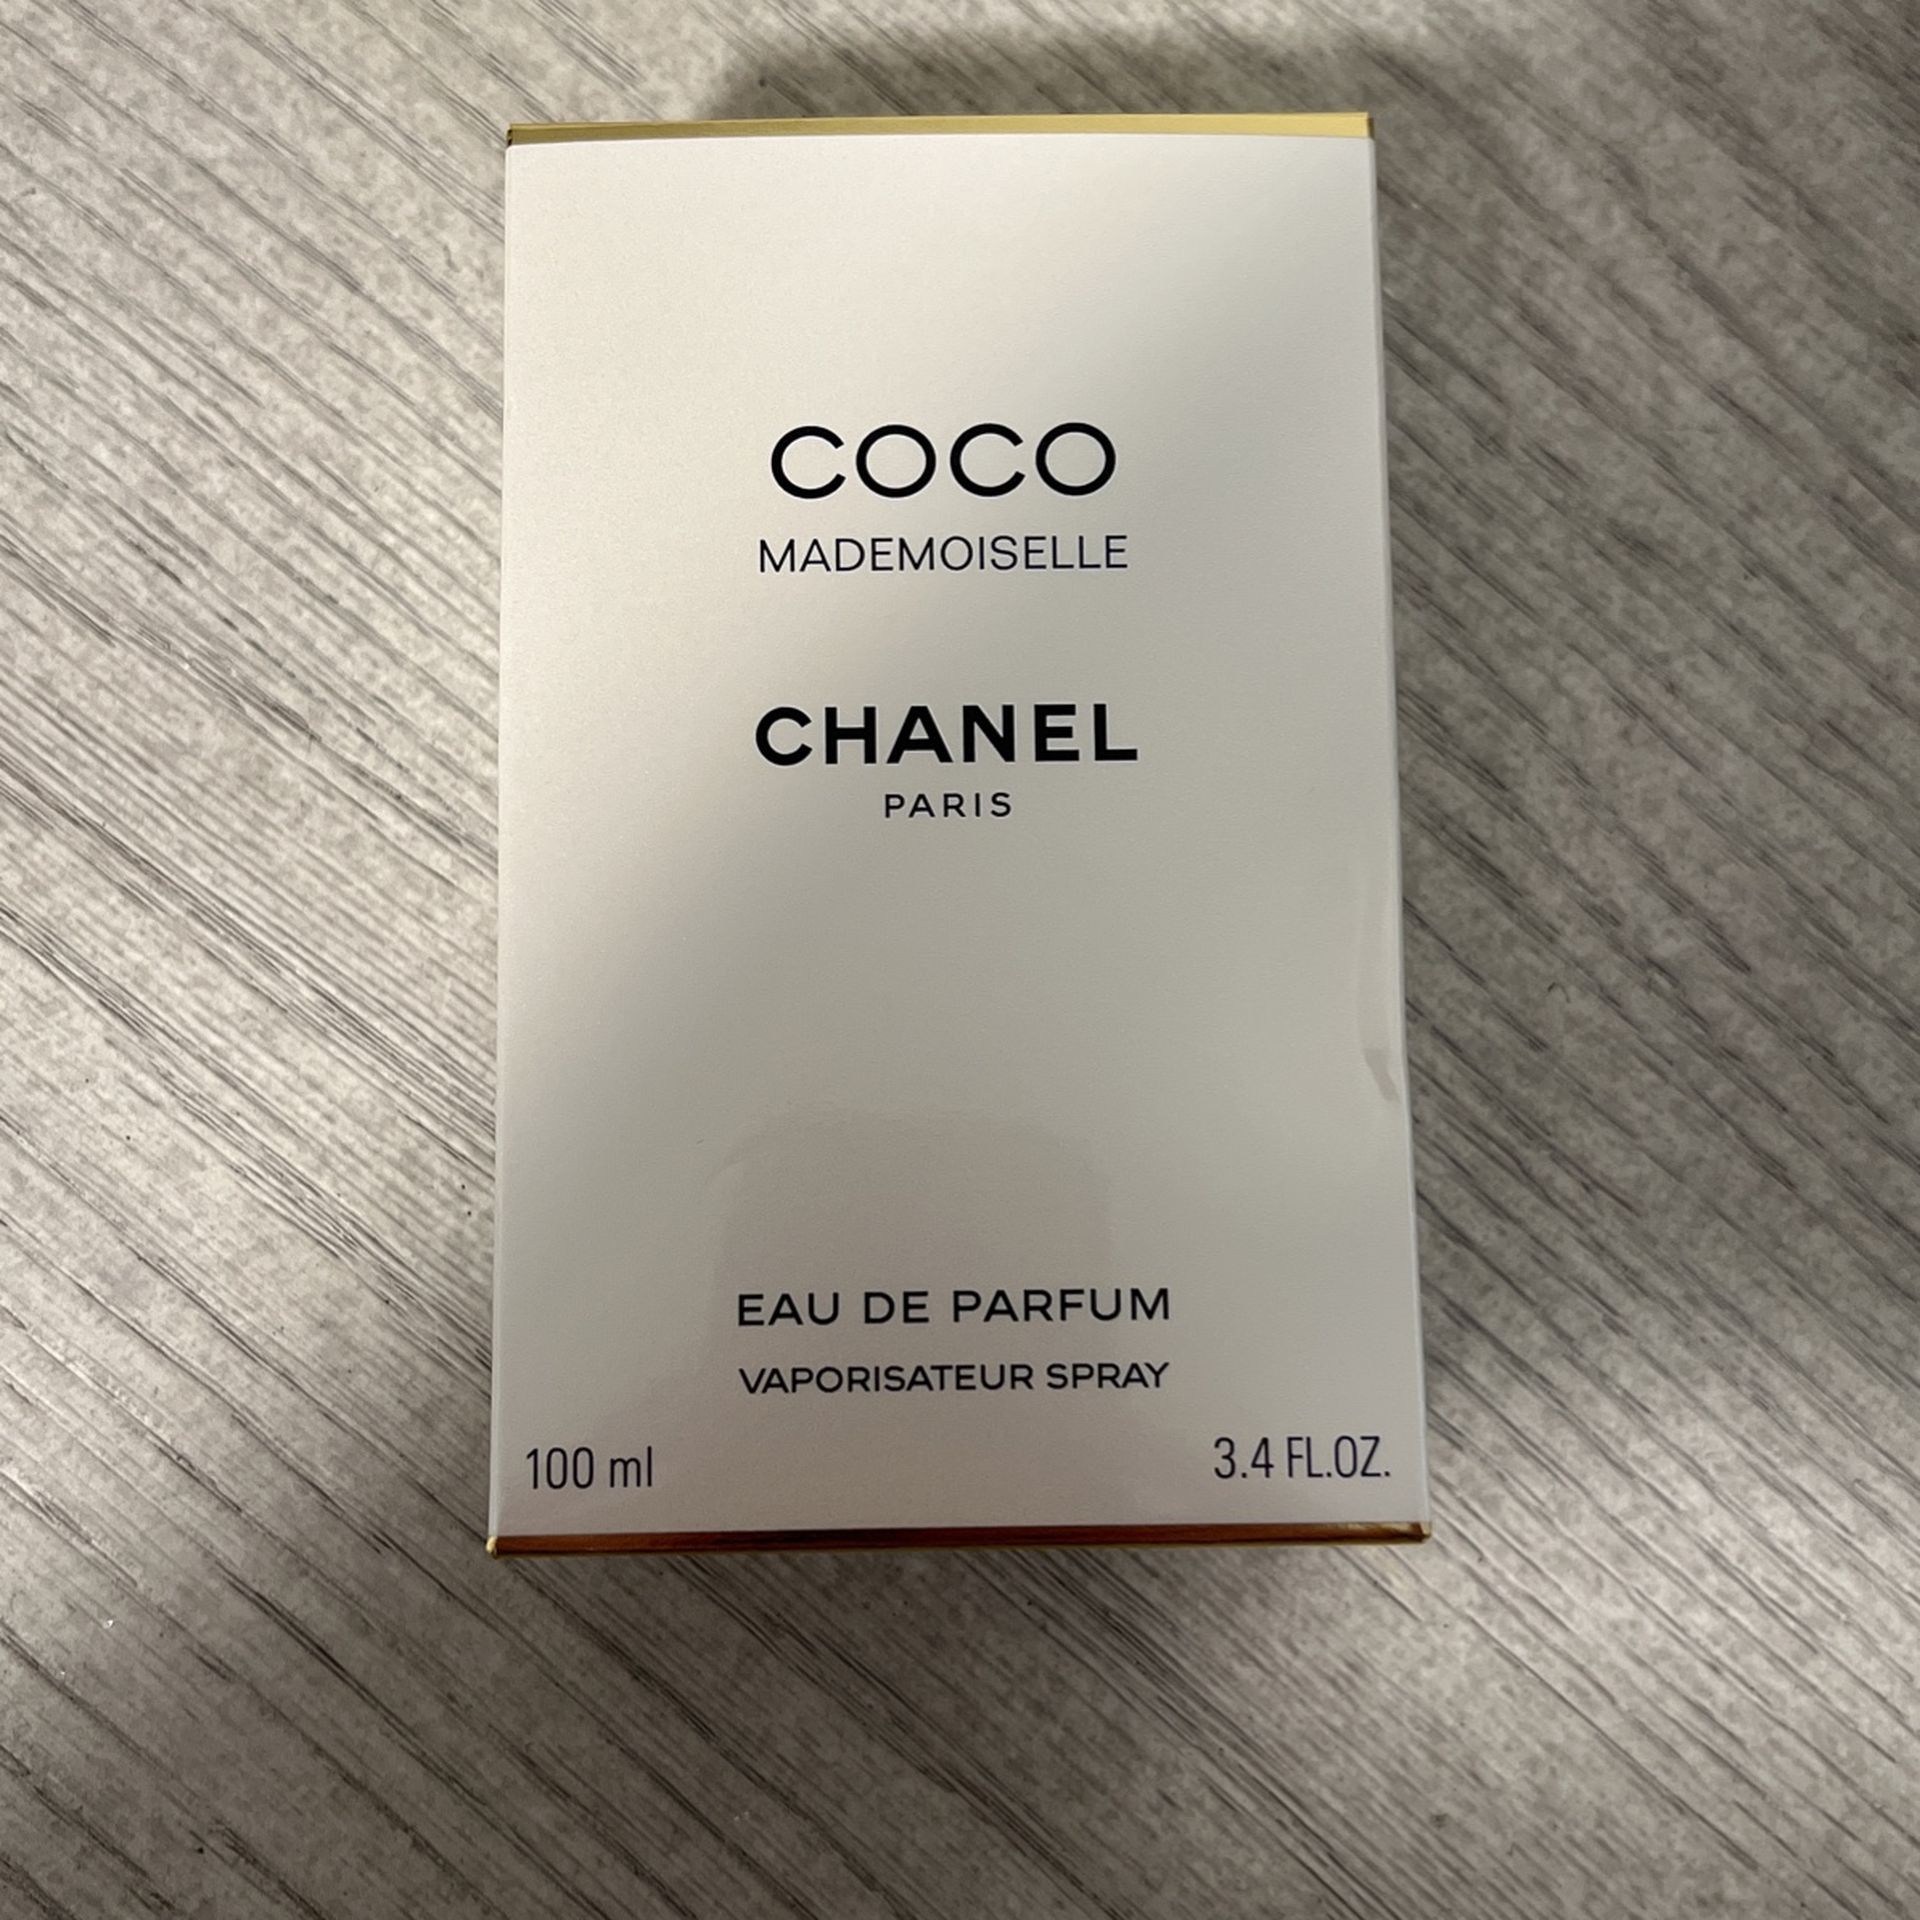 CHANEL COCO MADEMOISELLE Eau de Parfum Spray 3.4fl Oz for Sale in Portland,  OR - OfferUp